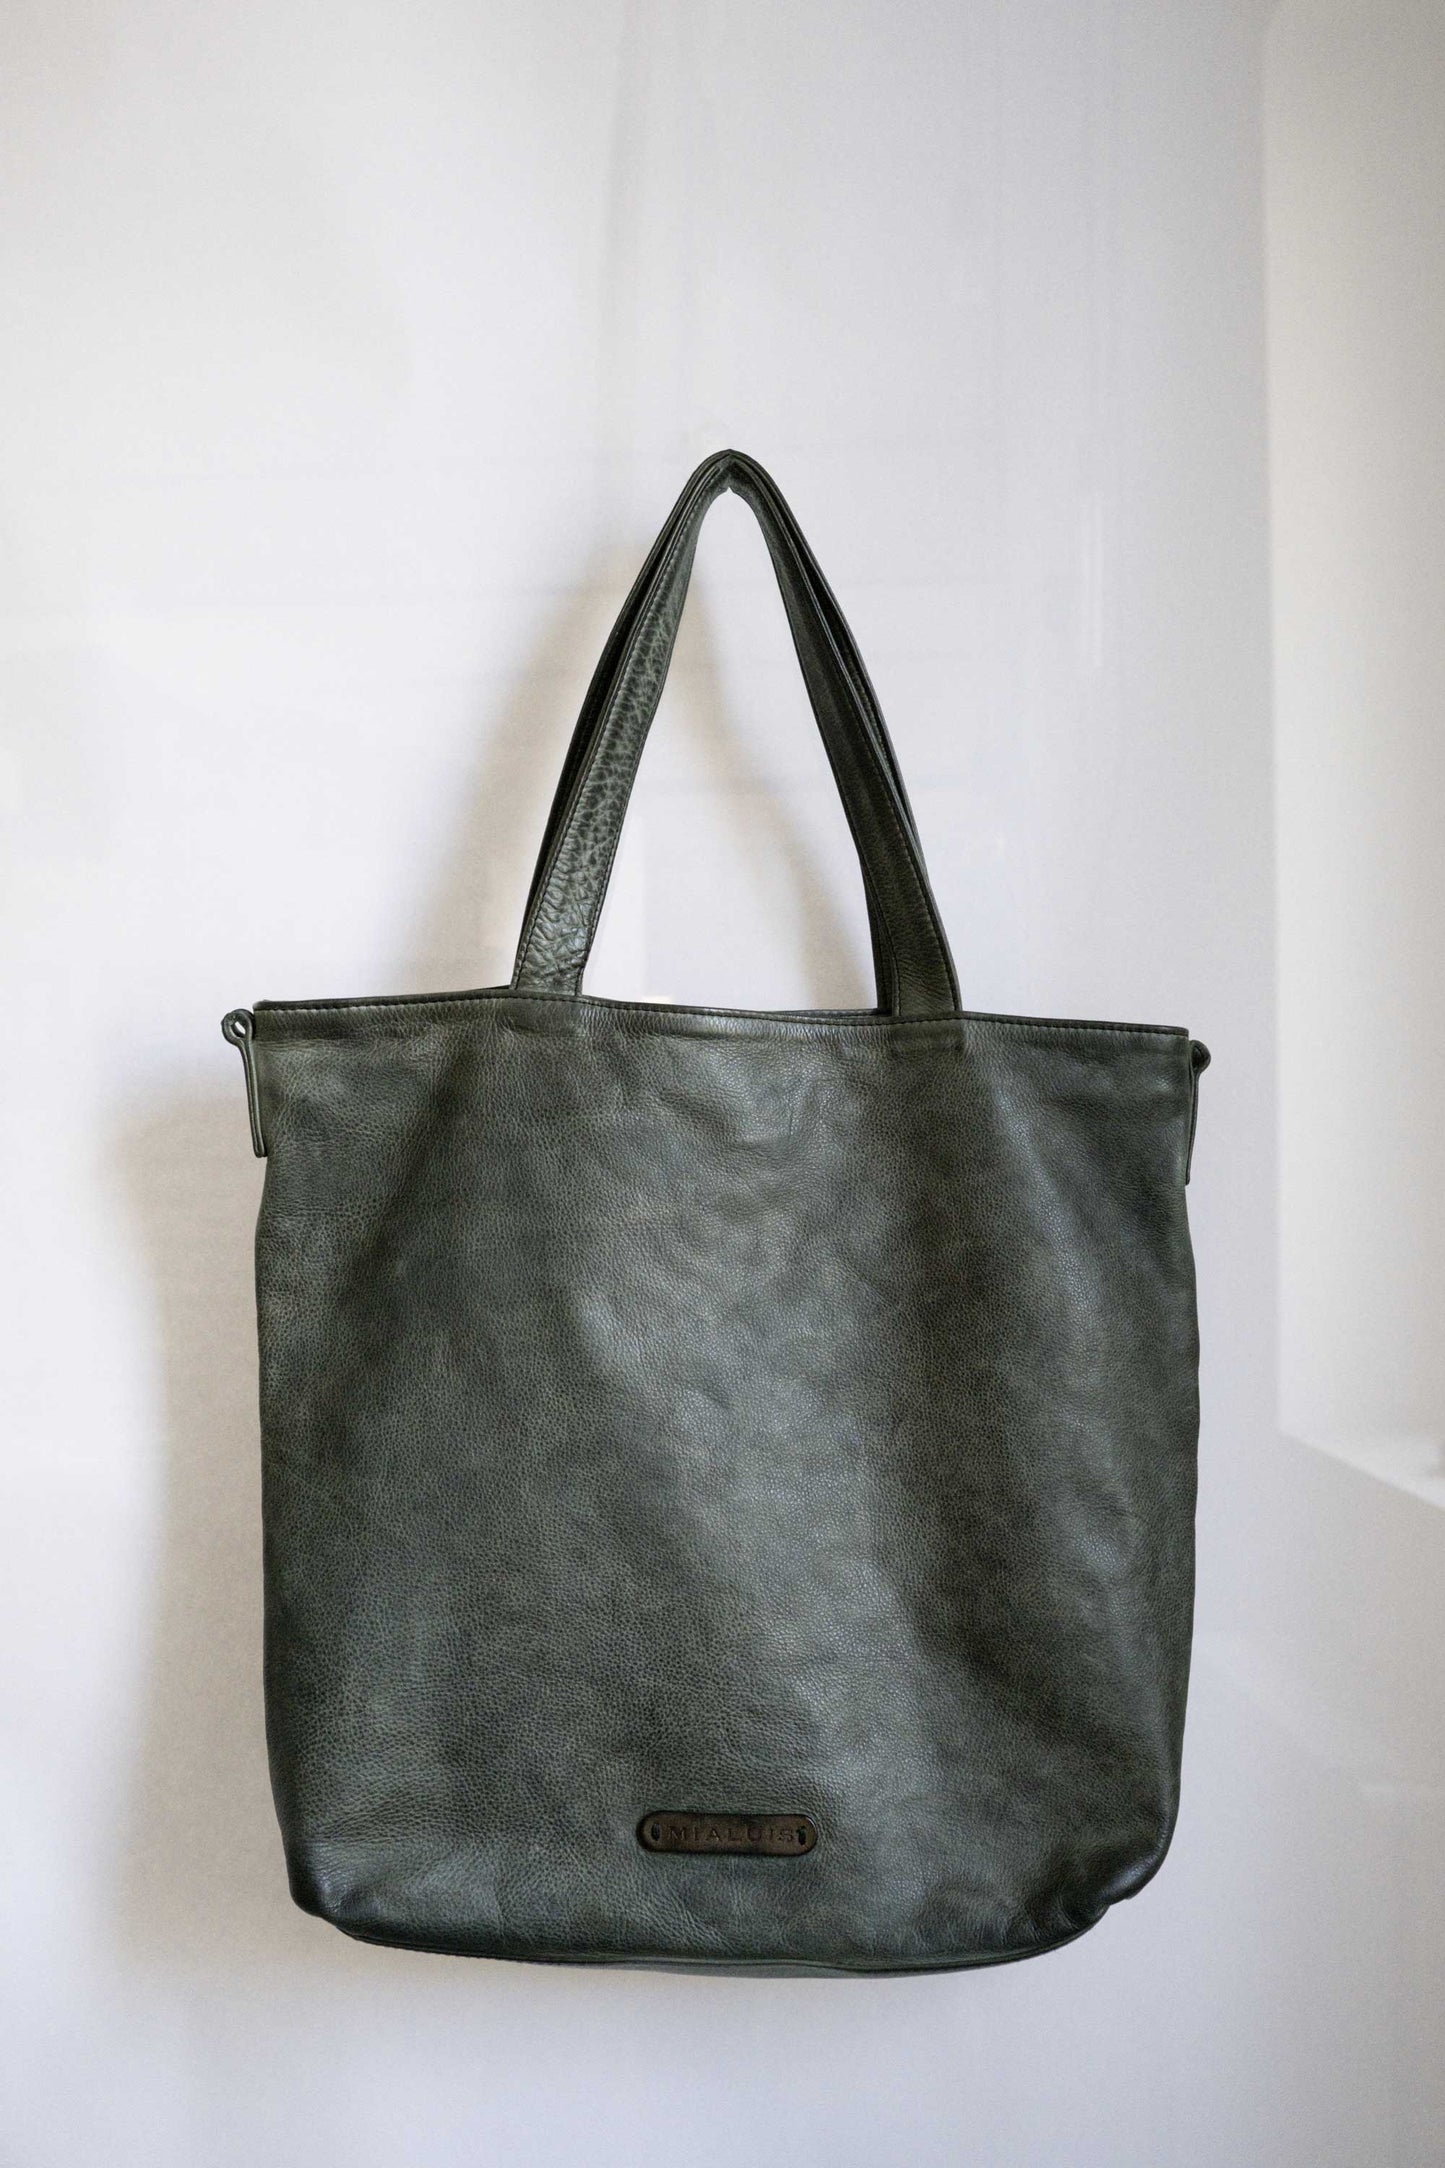 Sofi tote bag in Turner nappa leather